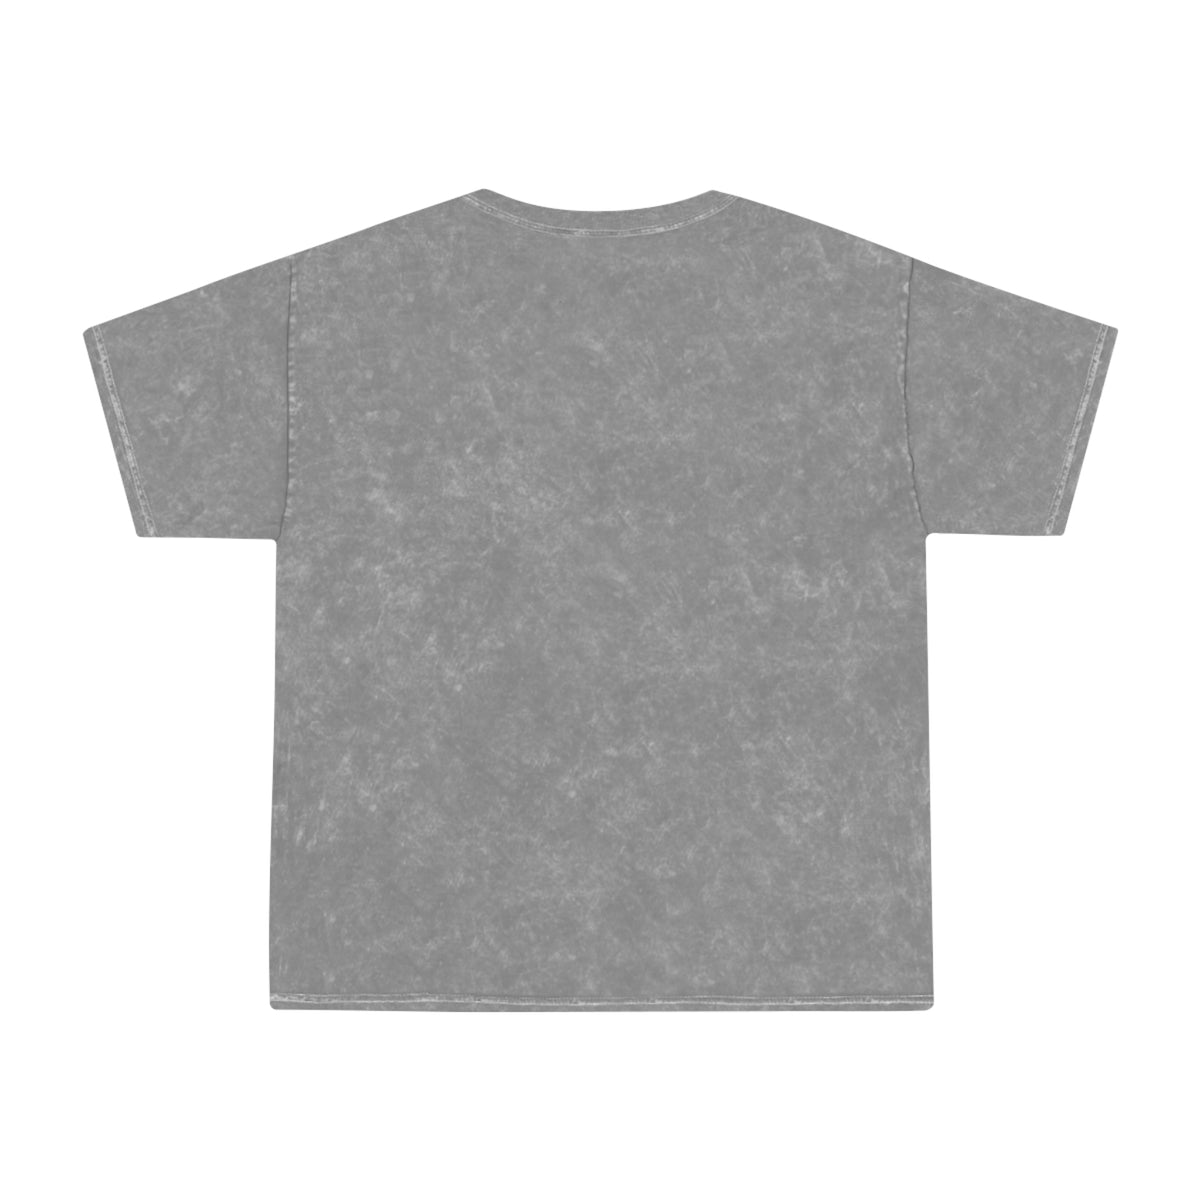 Magnolia Elementary School Unisex Mineral Wash T-Shirt